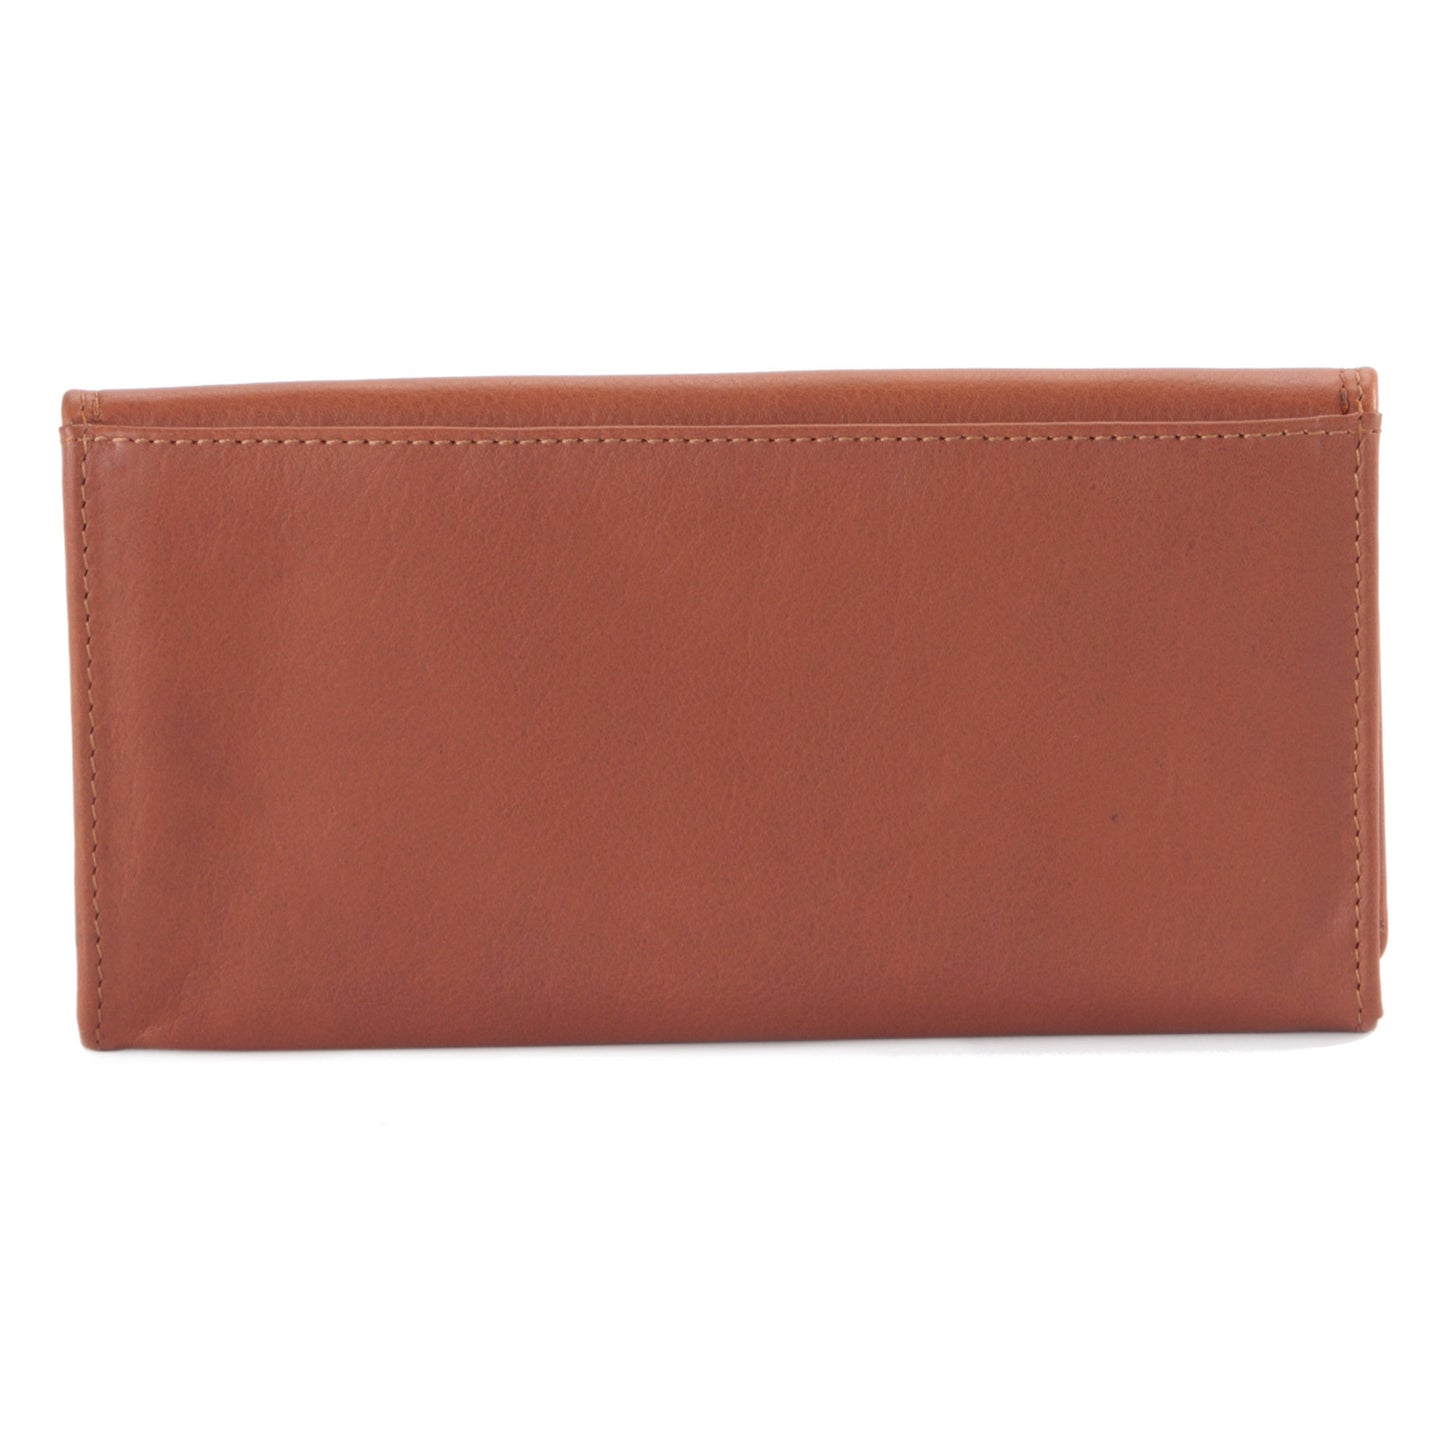 Ladies Tan Leather Clutch Wallet | Style n Craft